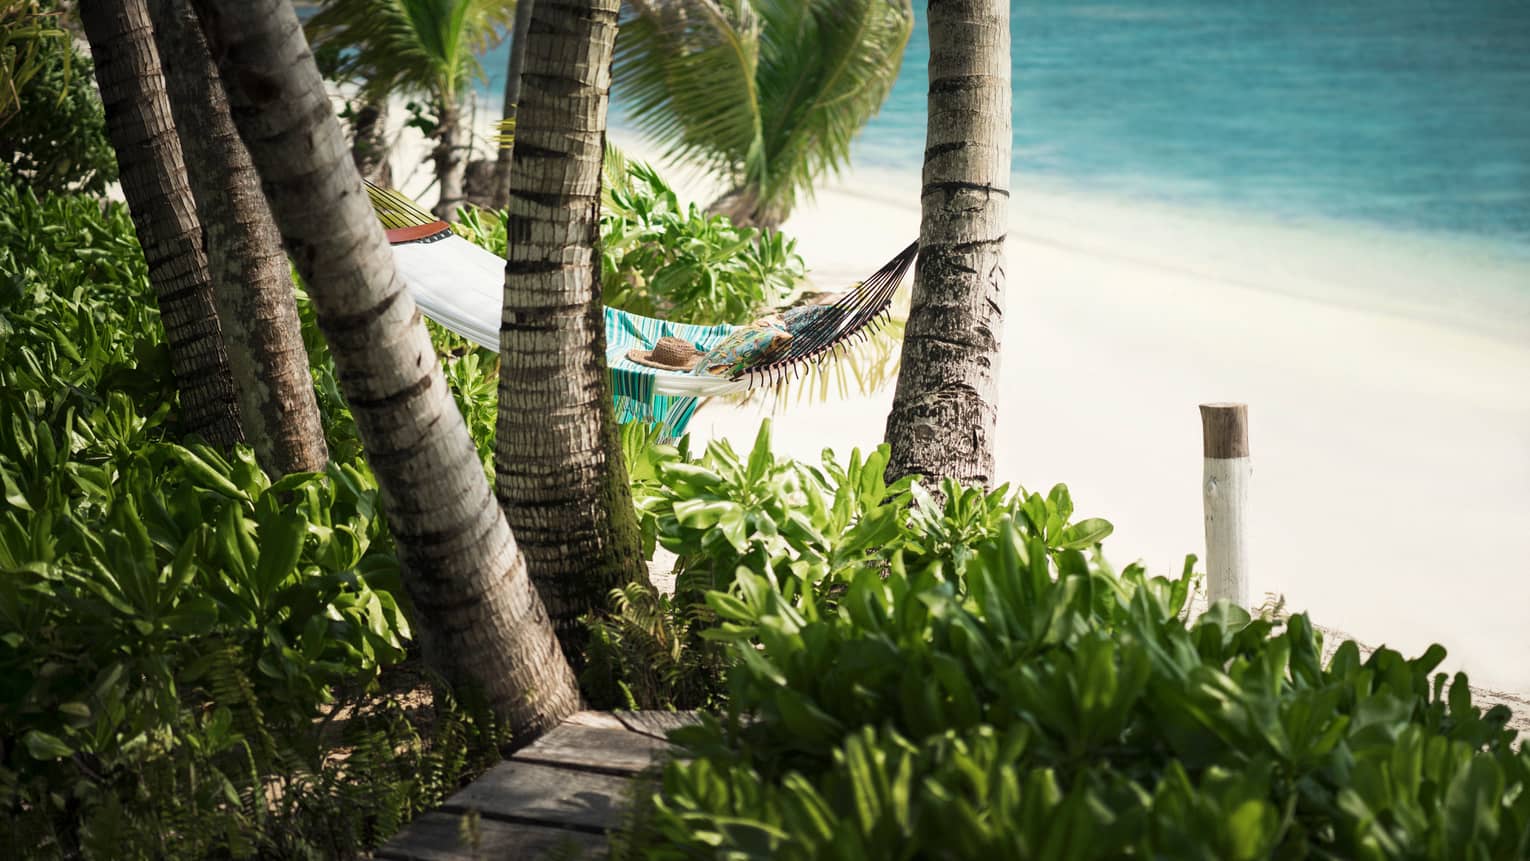 Colourful hammock hangs from between cluster of palm tree trunks near beach, ocean